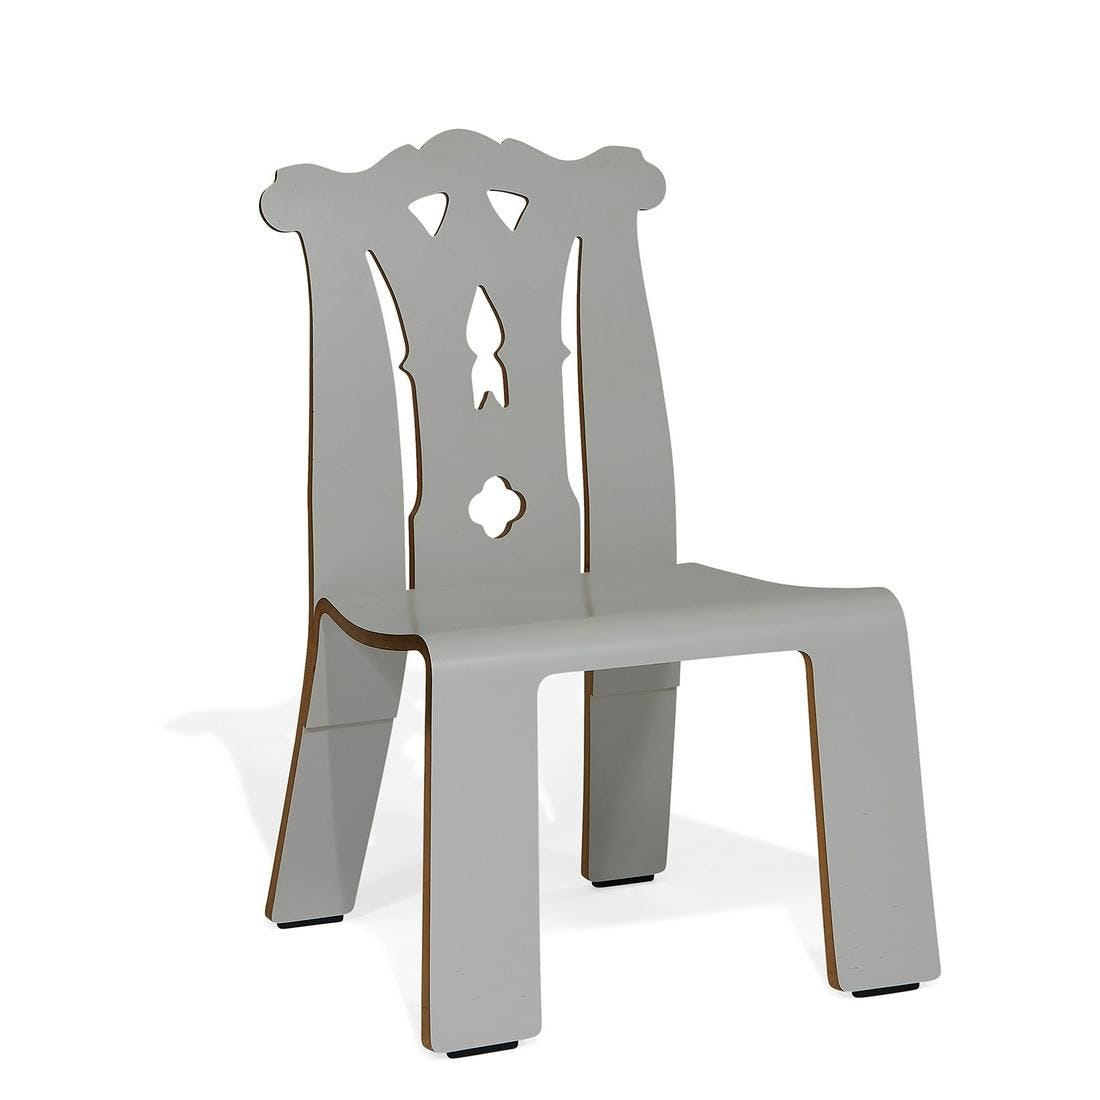 Robert Venturi Chippendale chair